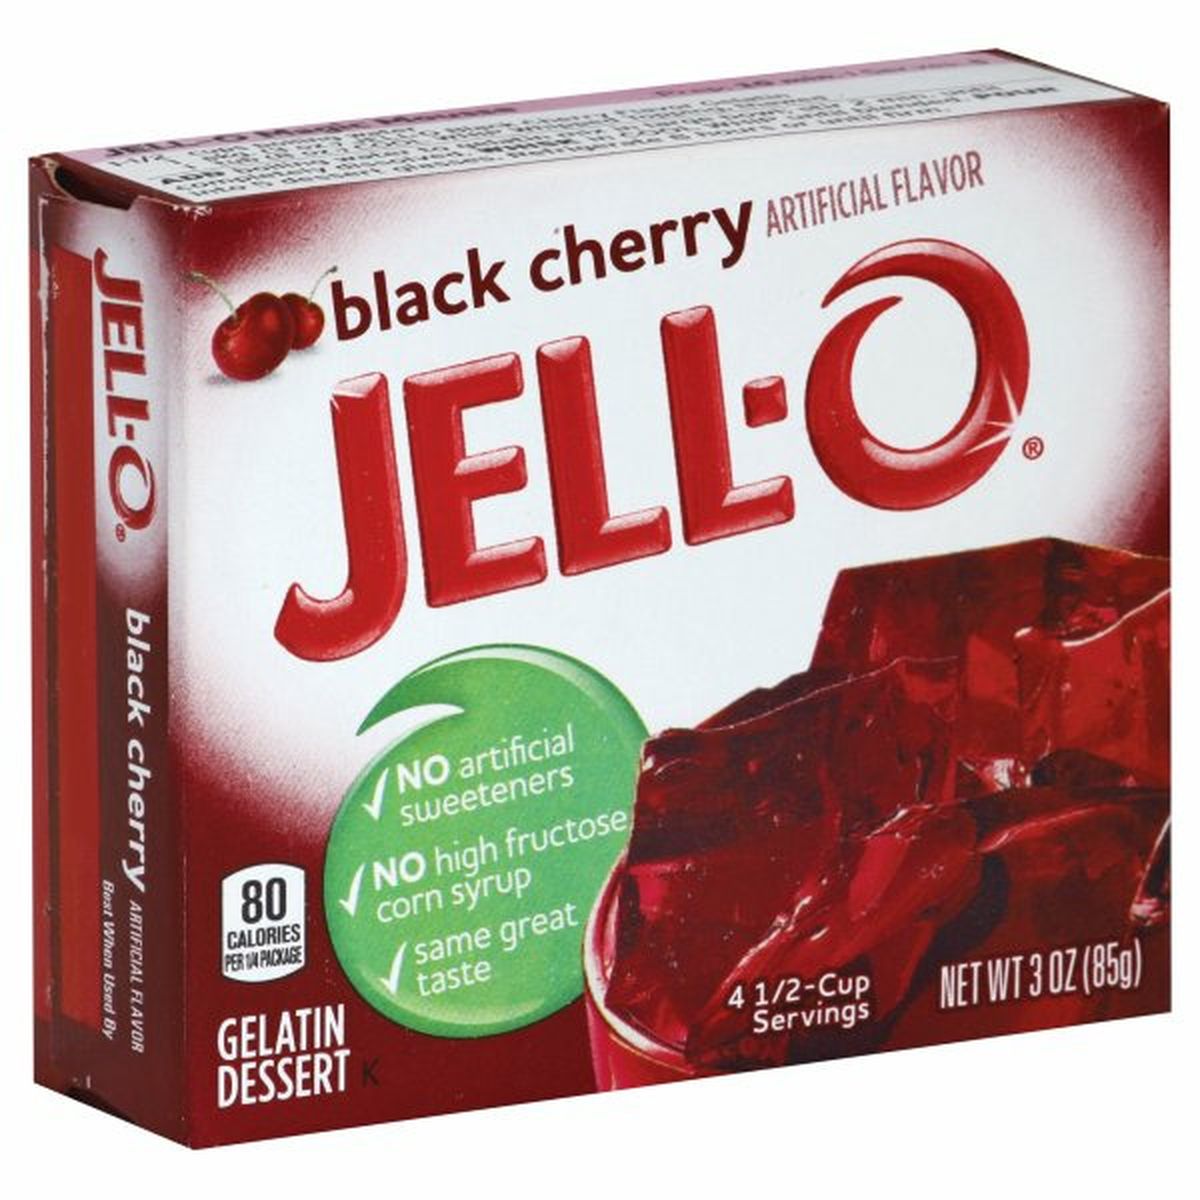 Calories in Jell-O Gelatin Dessert, Black Cherry